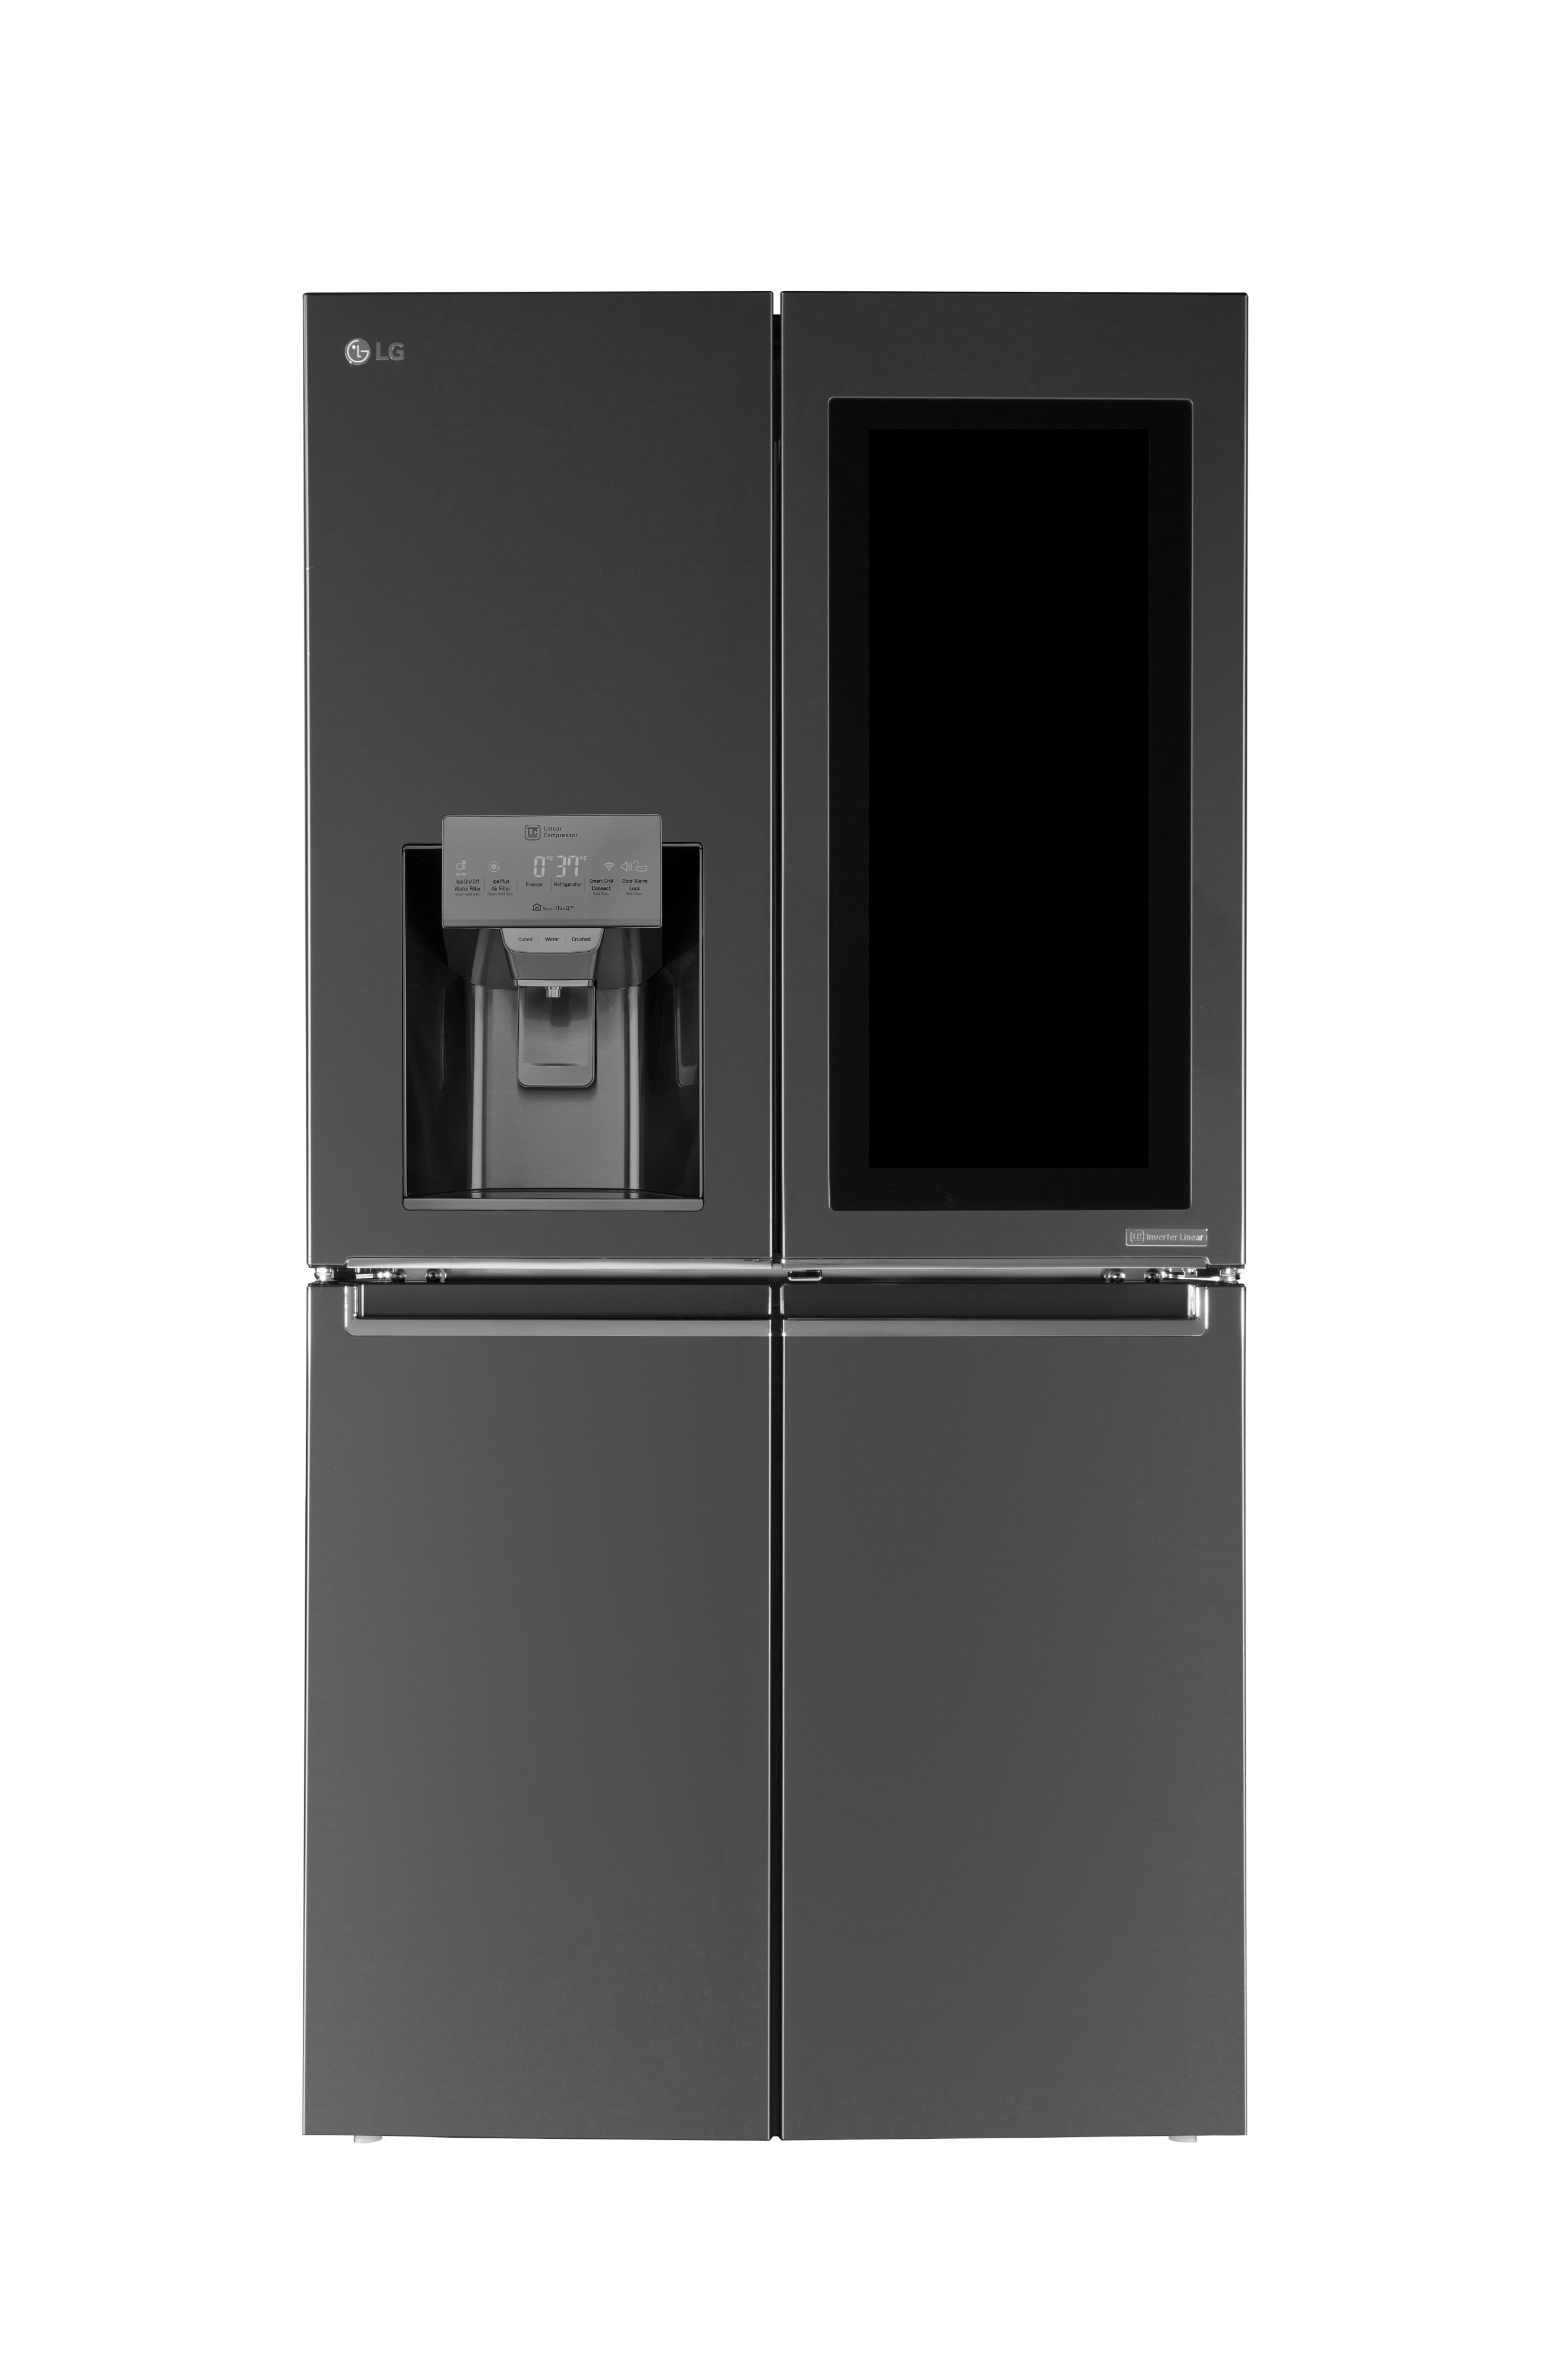 LG Smart nstaview Refrigerator